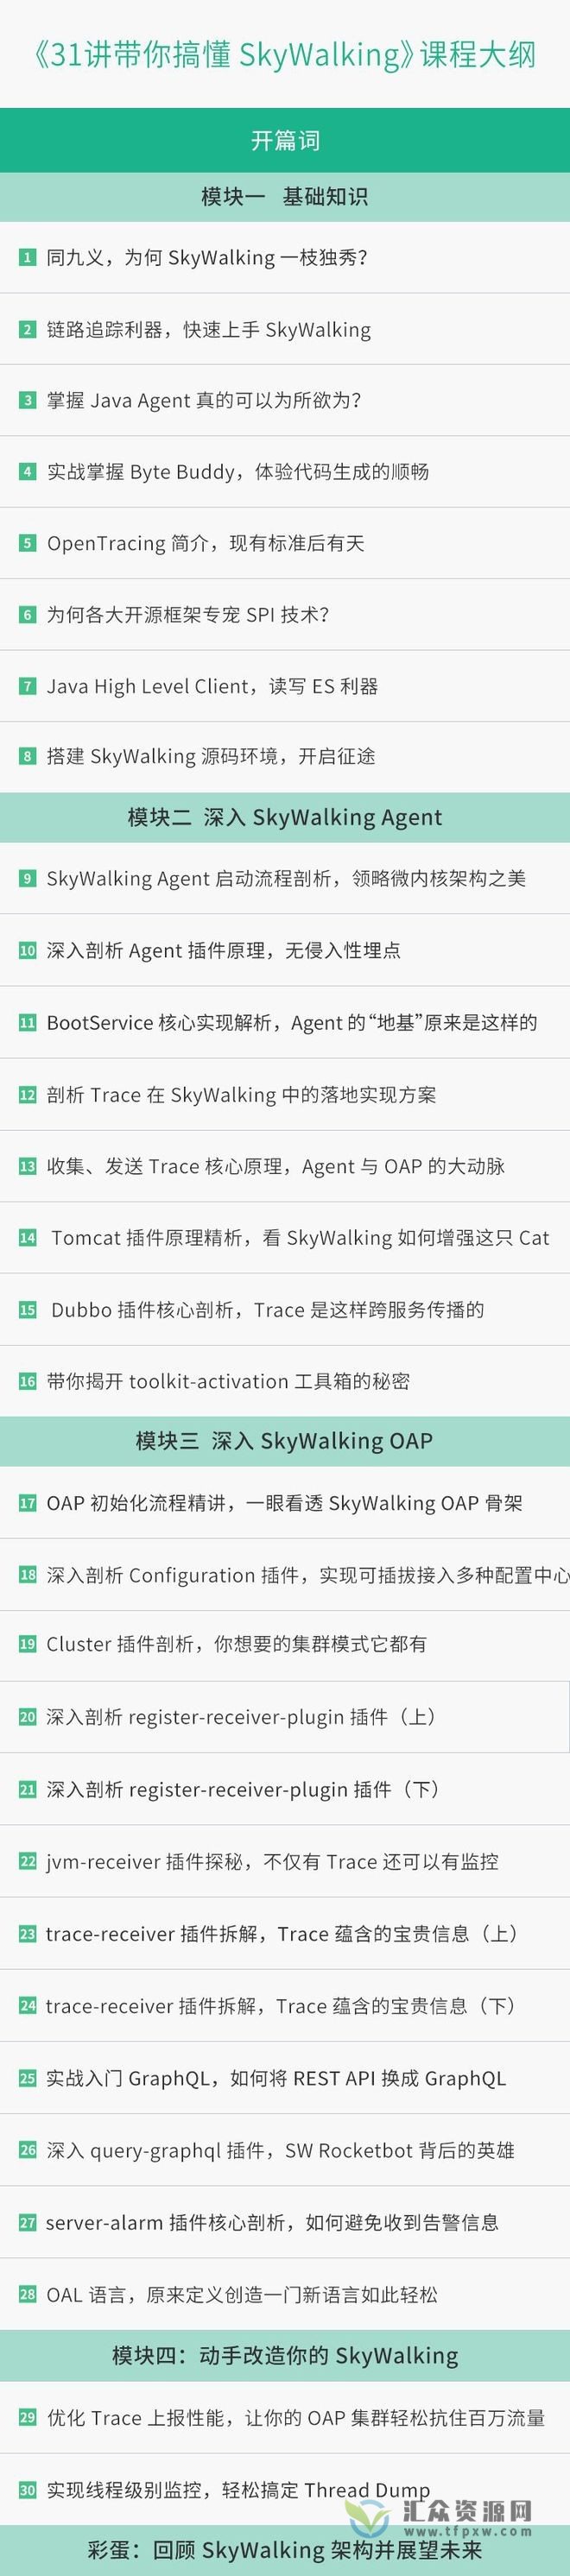 SkyWalking官方推荐教程-拉勾教育《31讲带你搞懂SkyWalking》（附资料）插图1